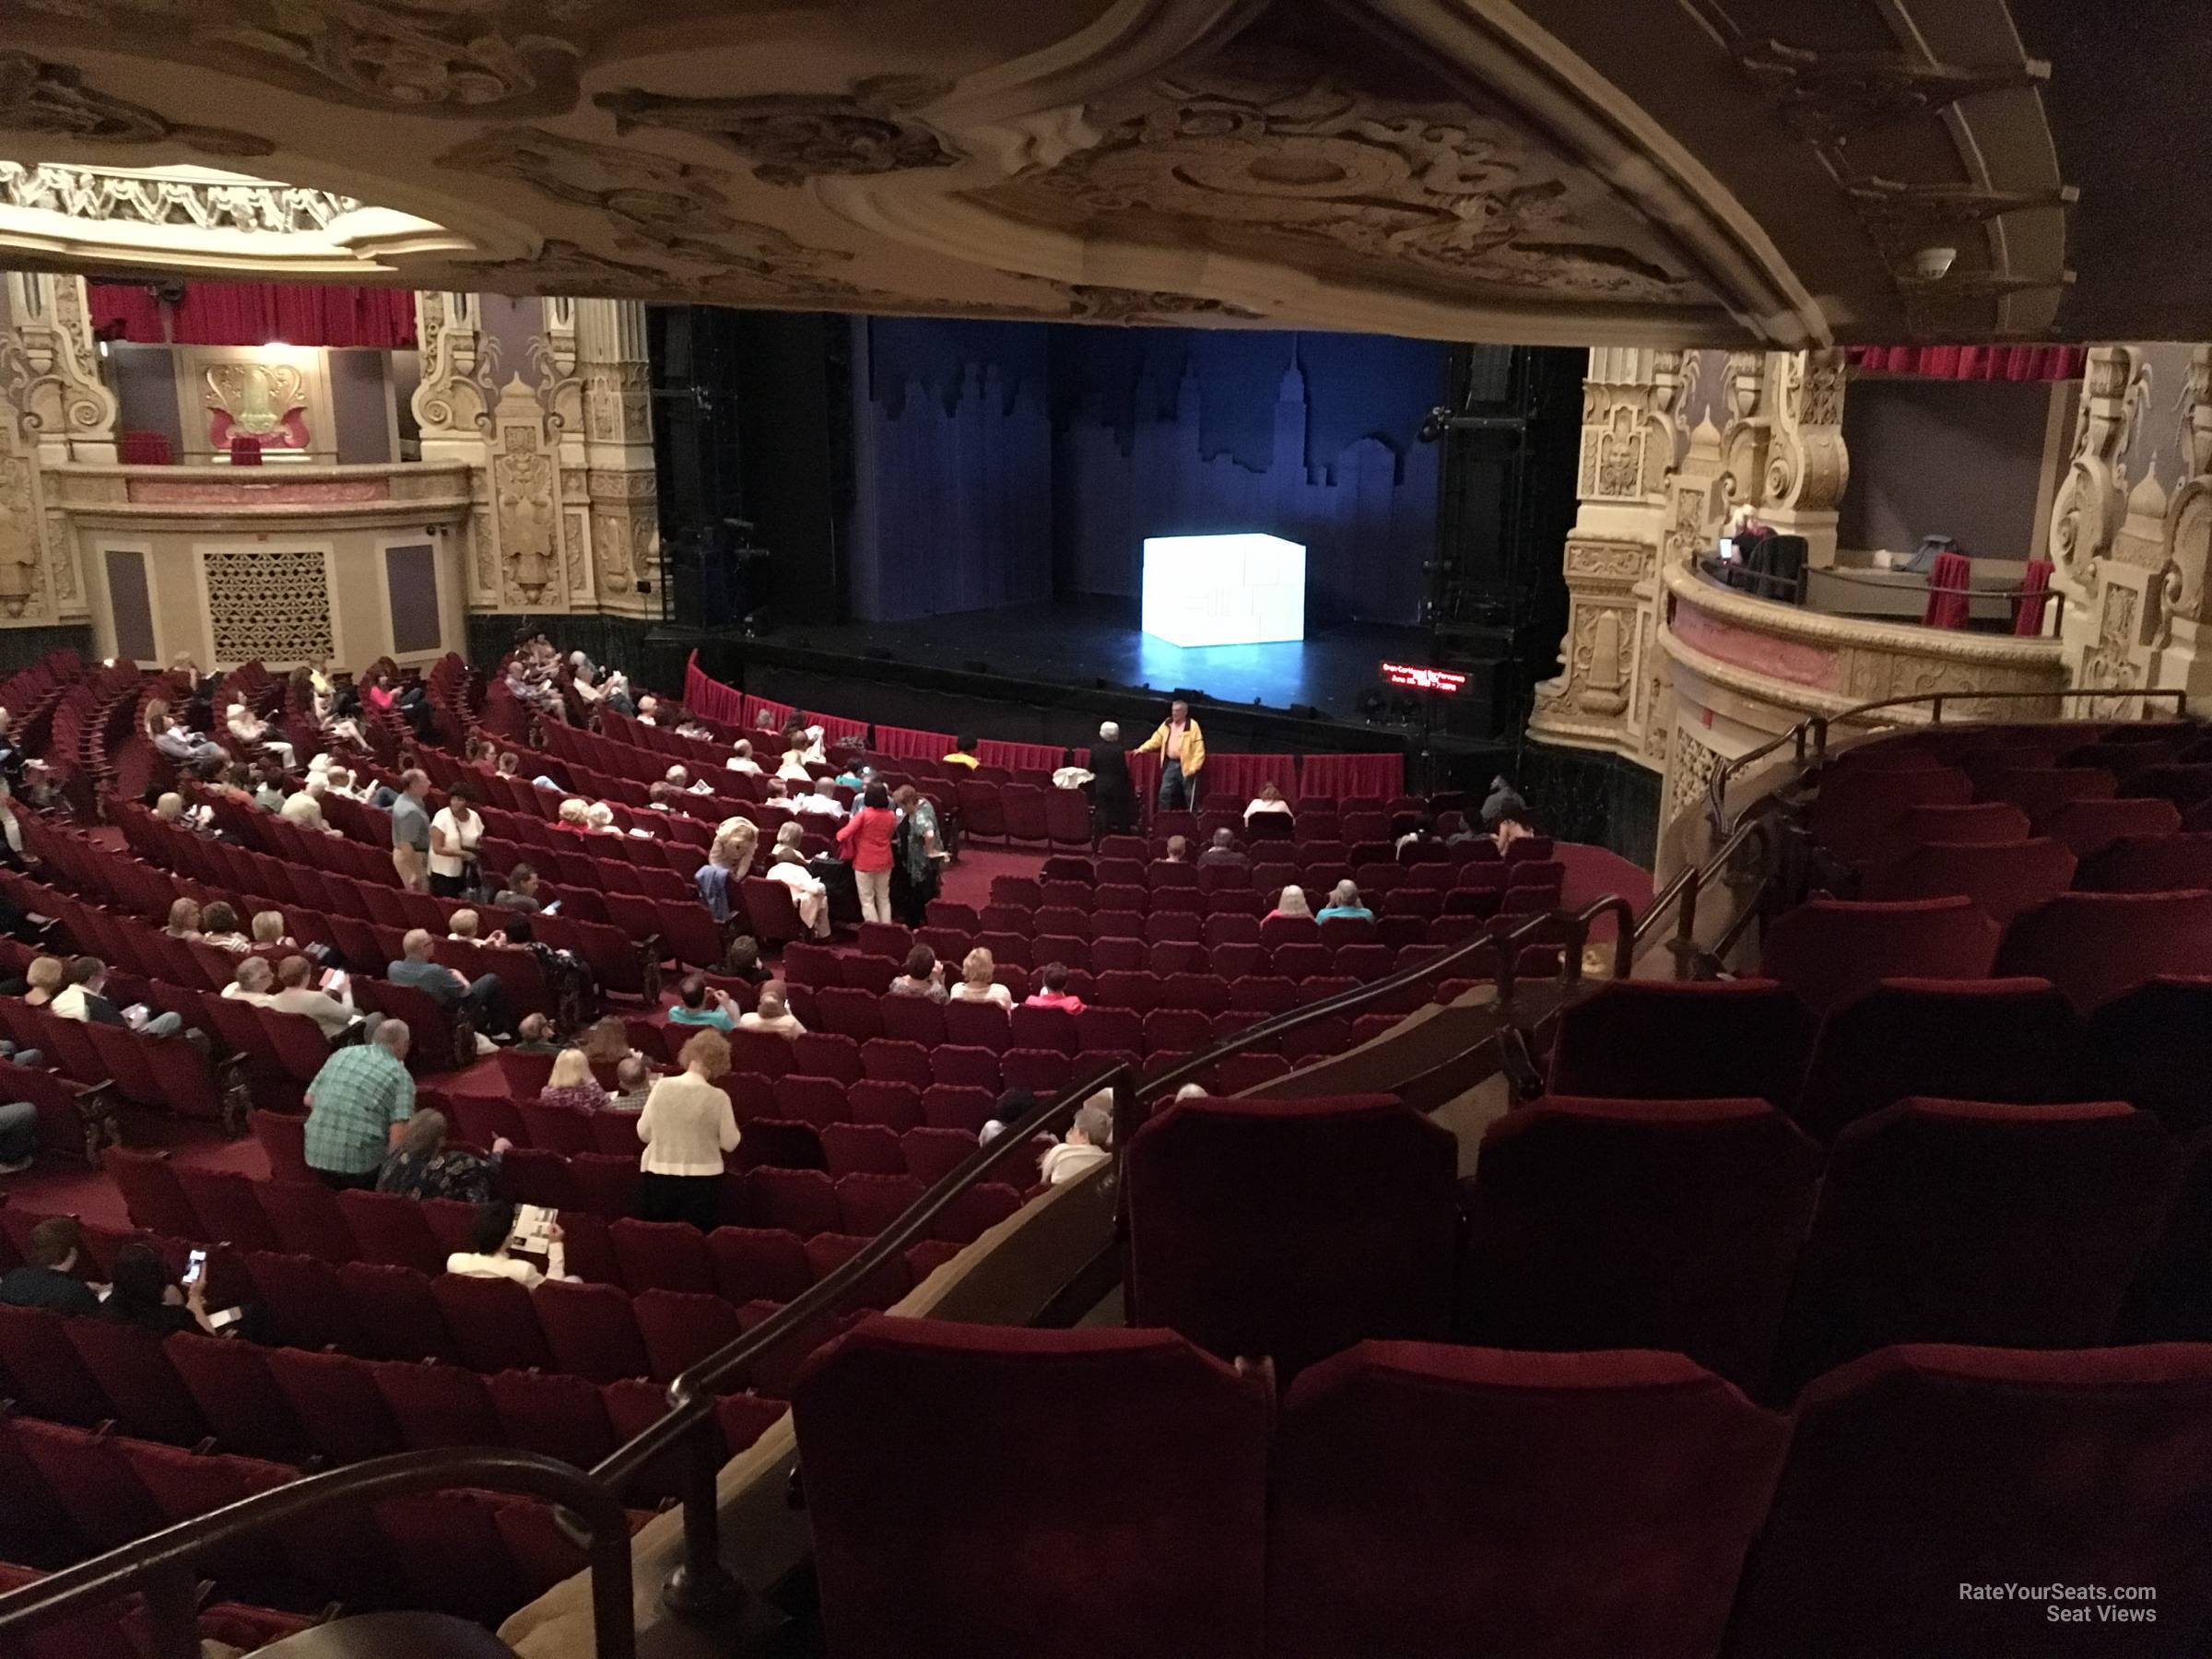 Sondheim Theatre London Seating Plan & Seat View Photos | SeatPlan